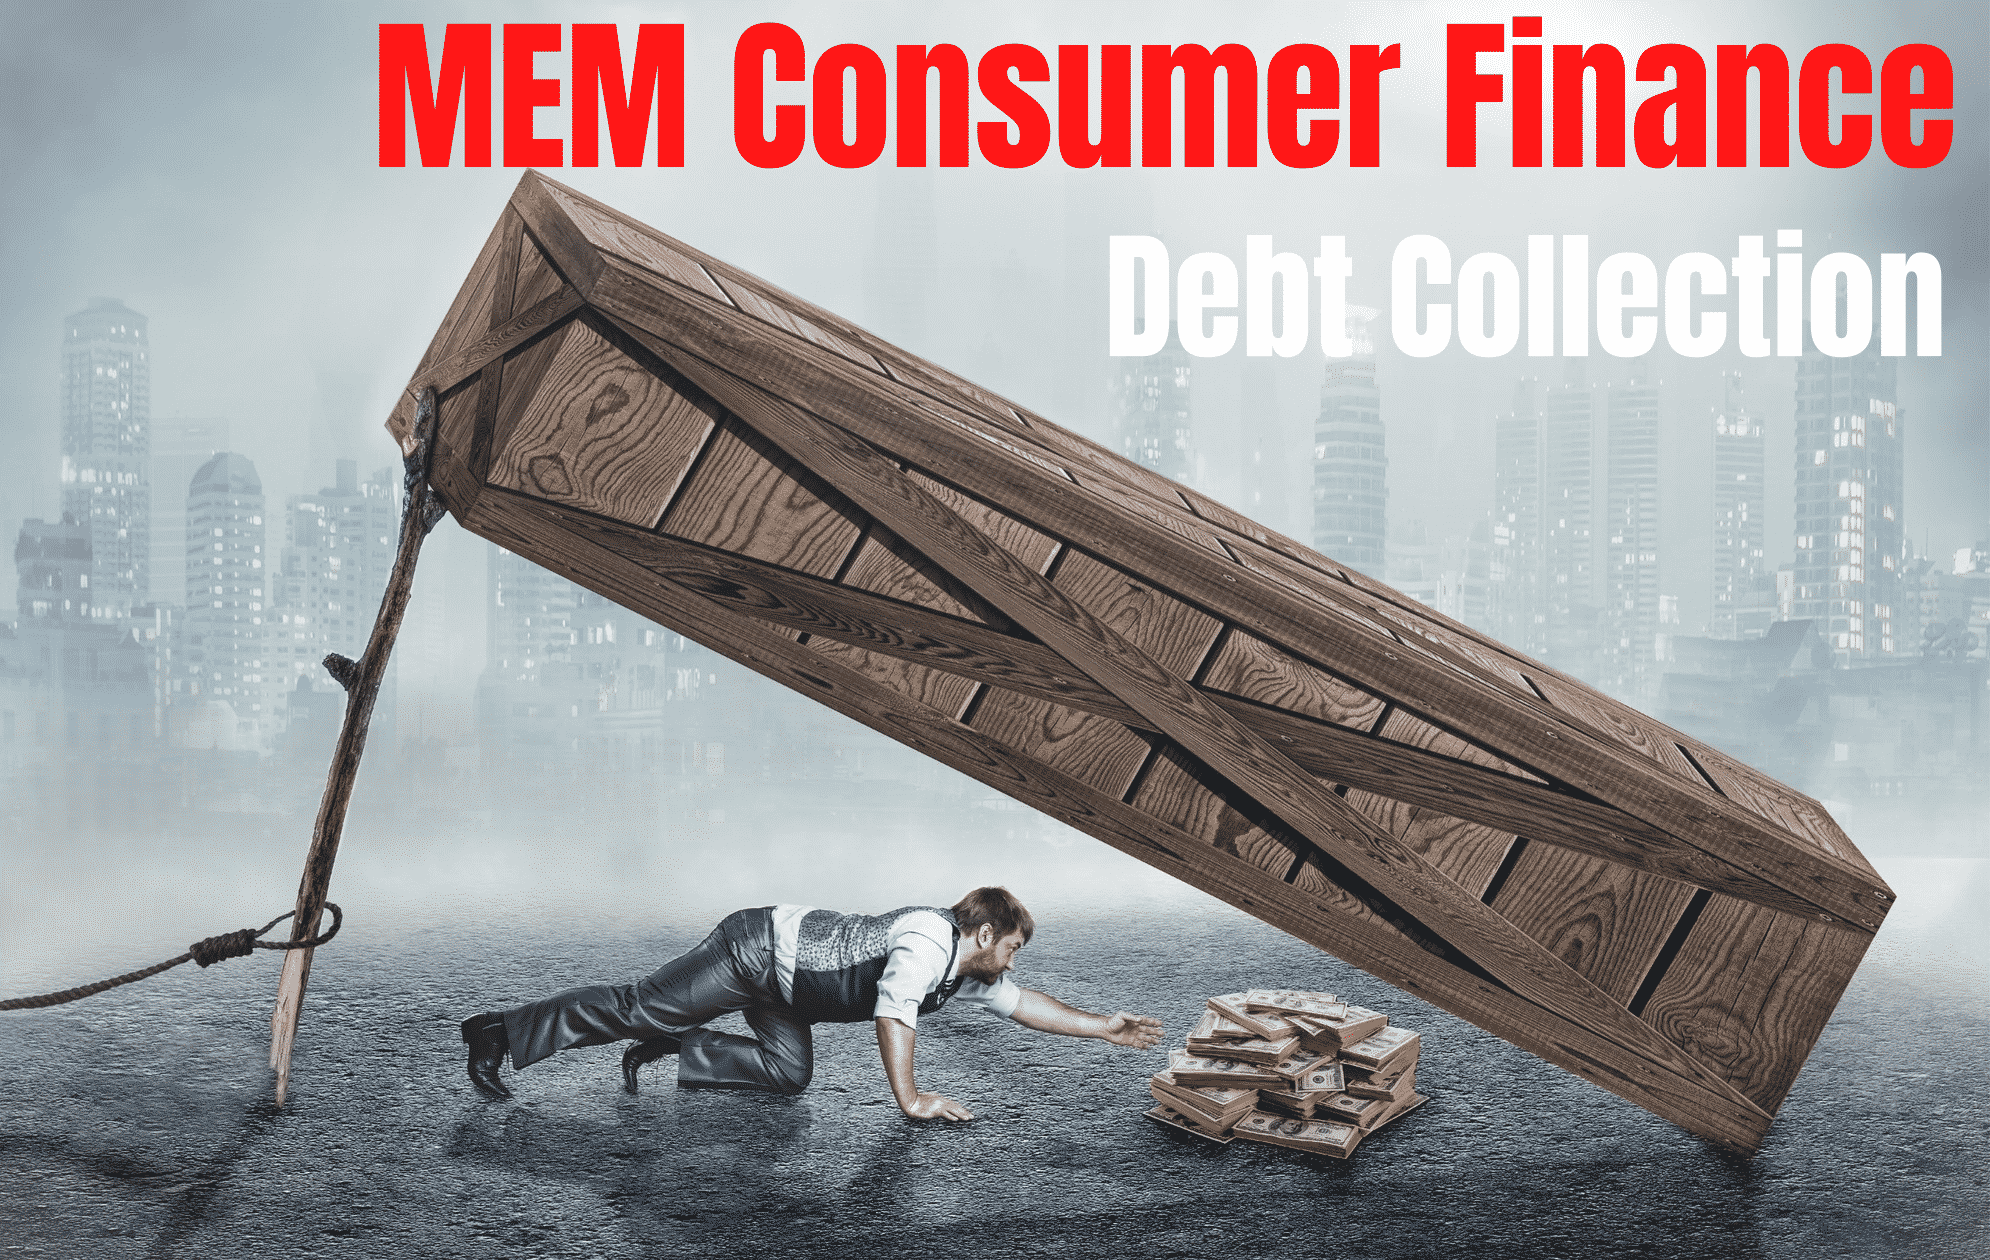 MEM-consumer-finance-debt-collection